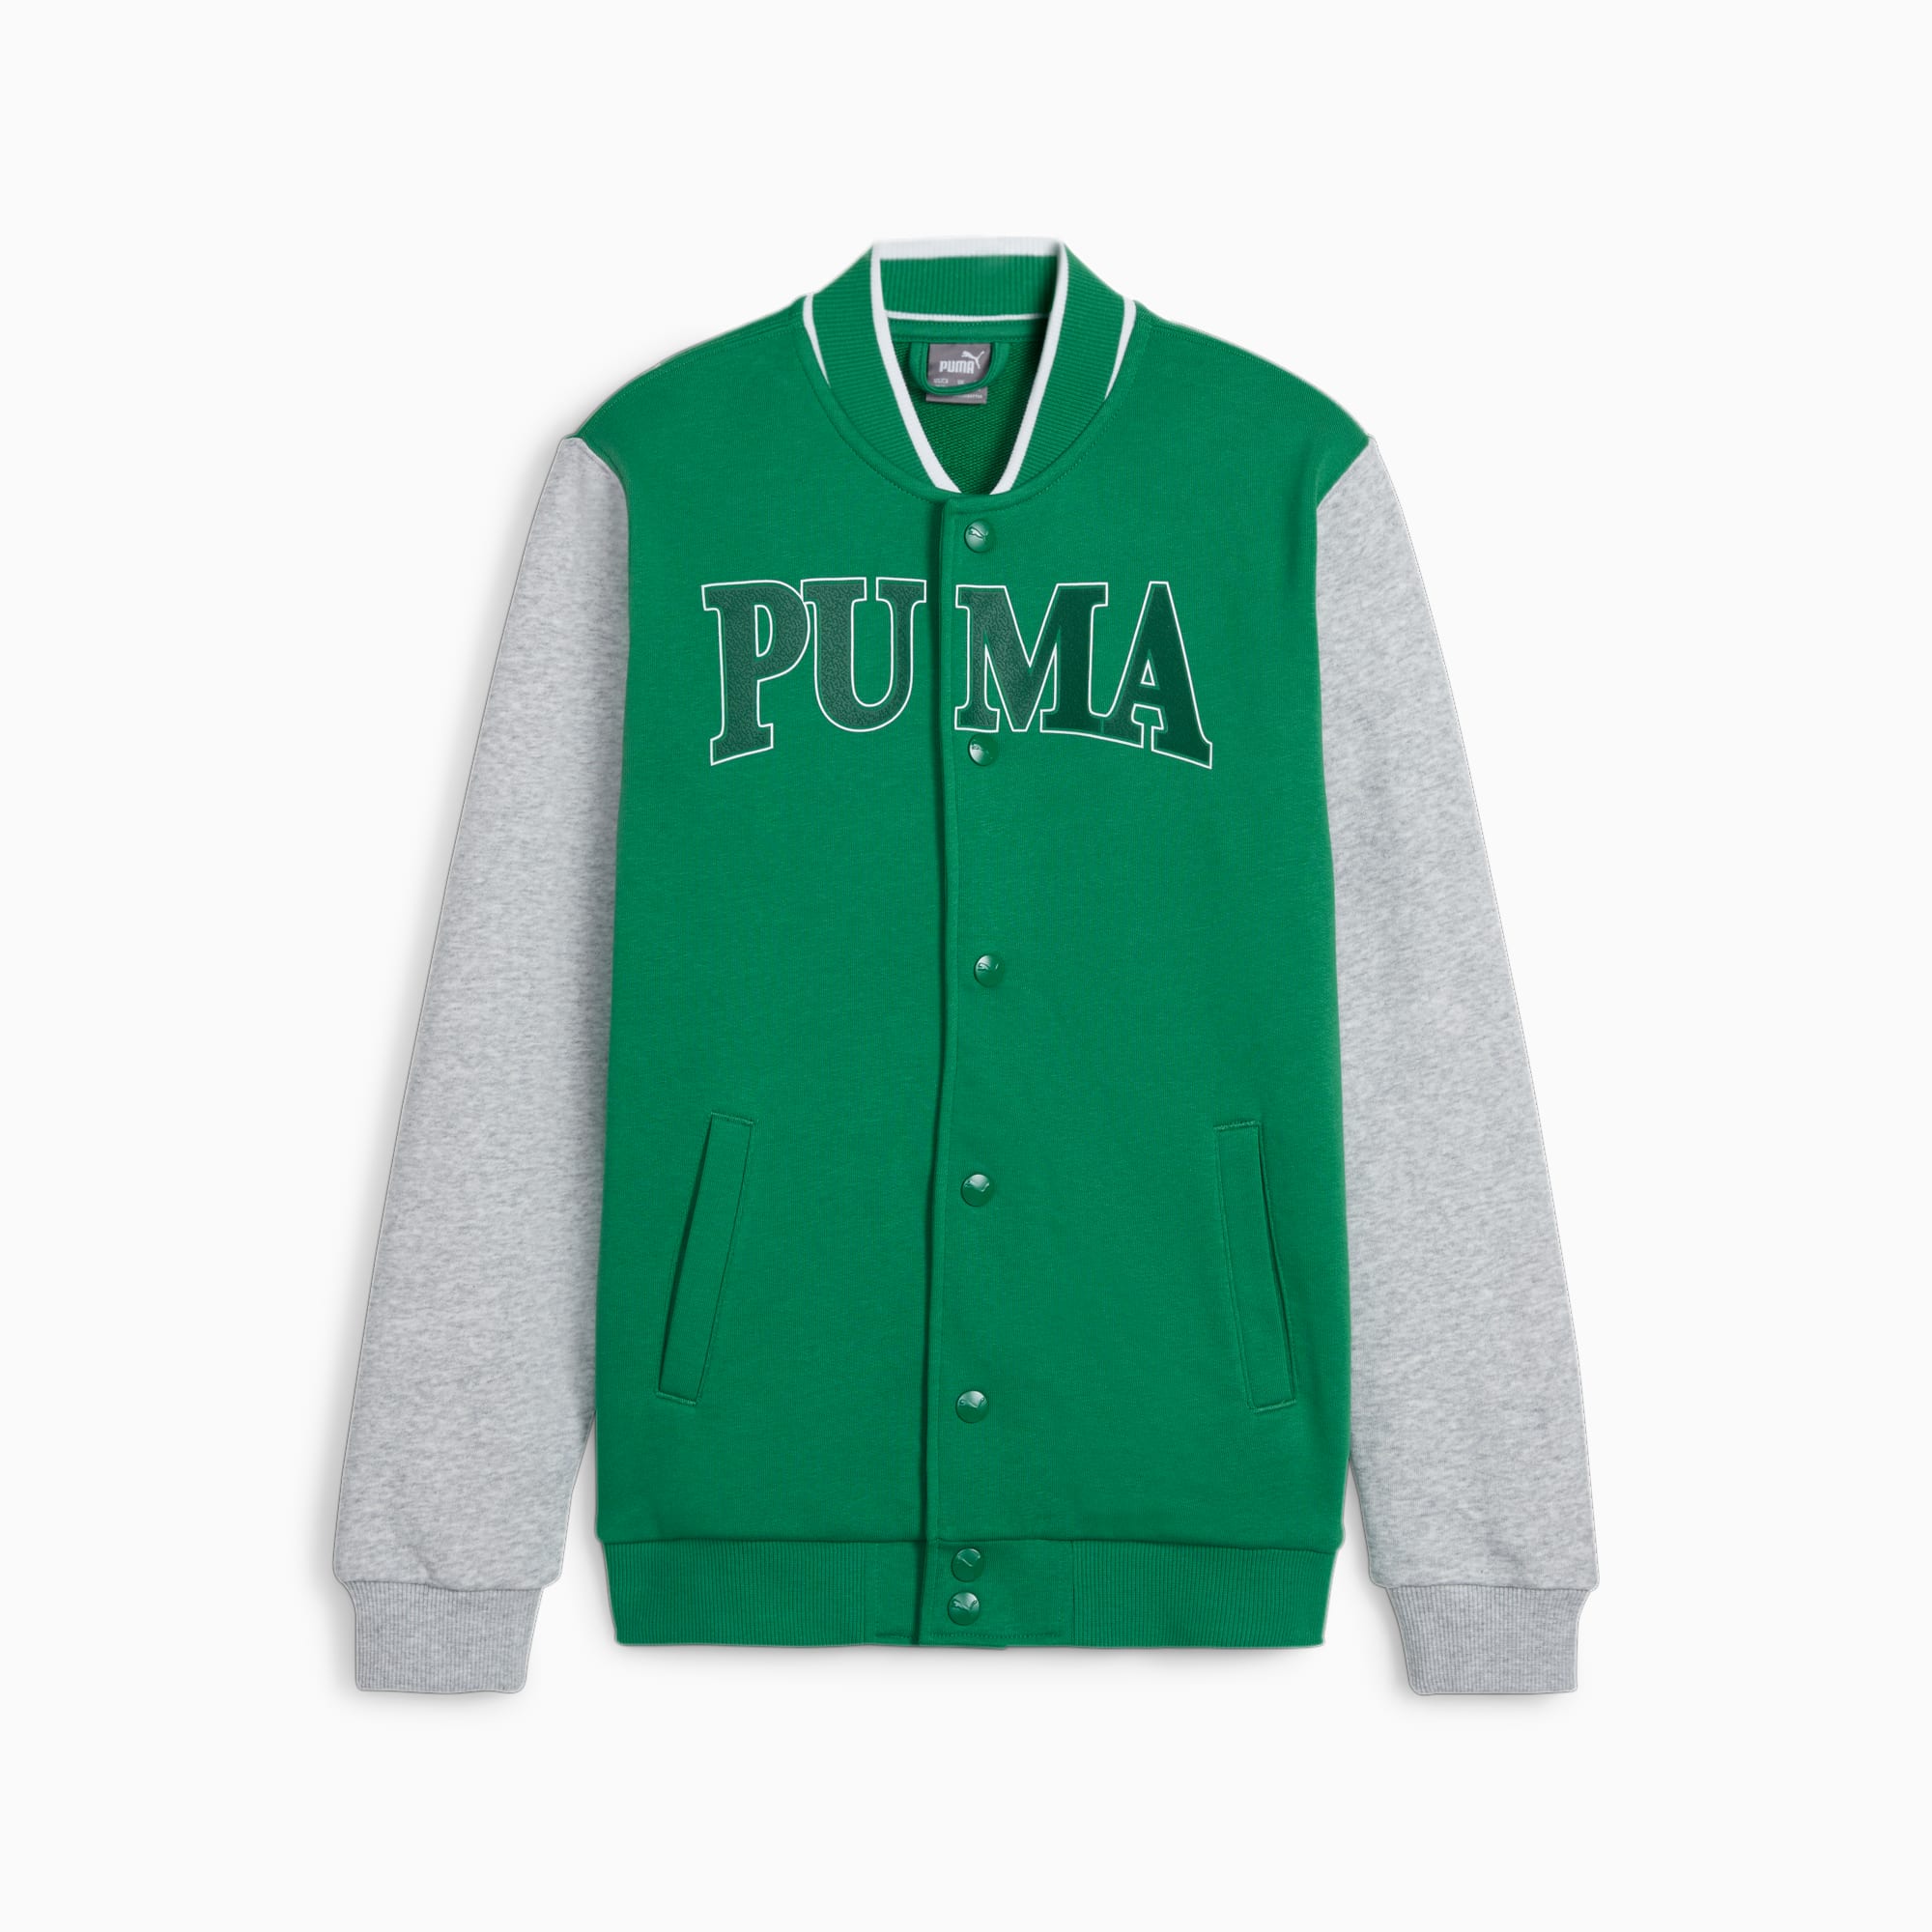 PUMA Squad Youth Bomber Jacket, Archive Green, Size 128, Clothing